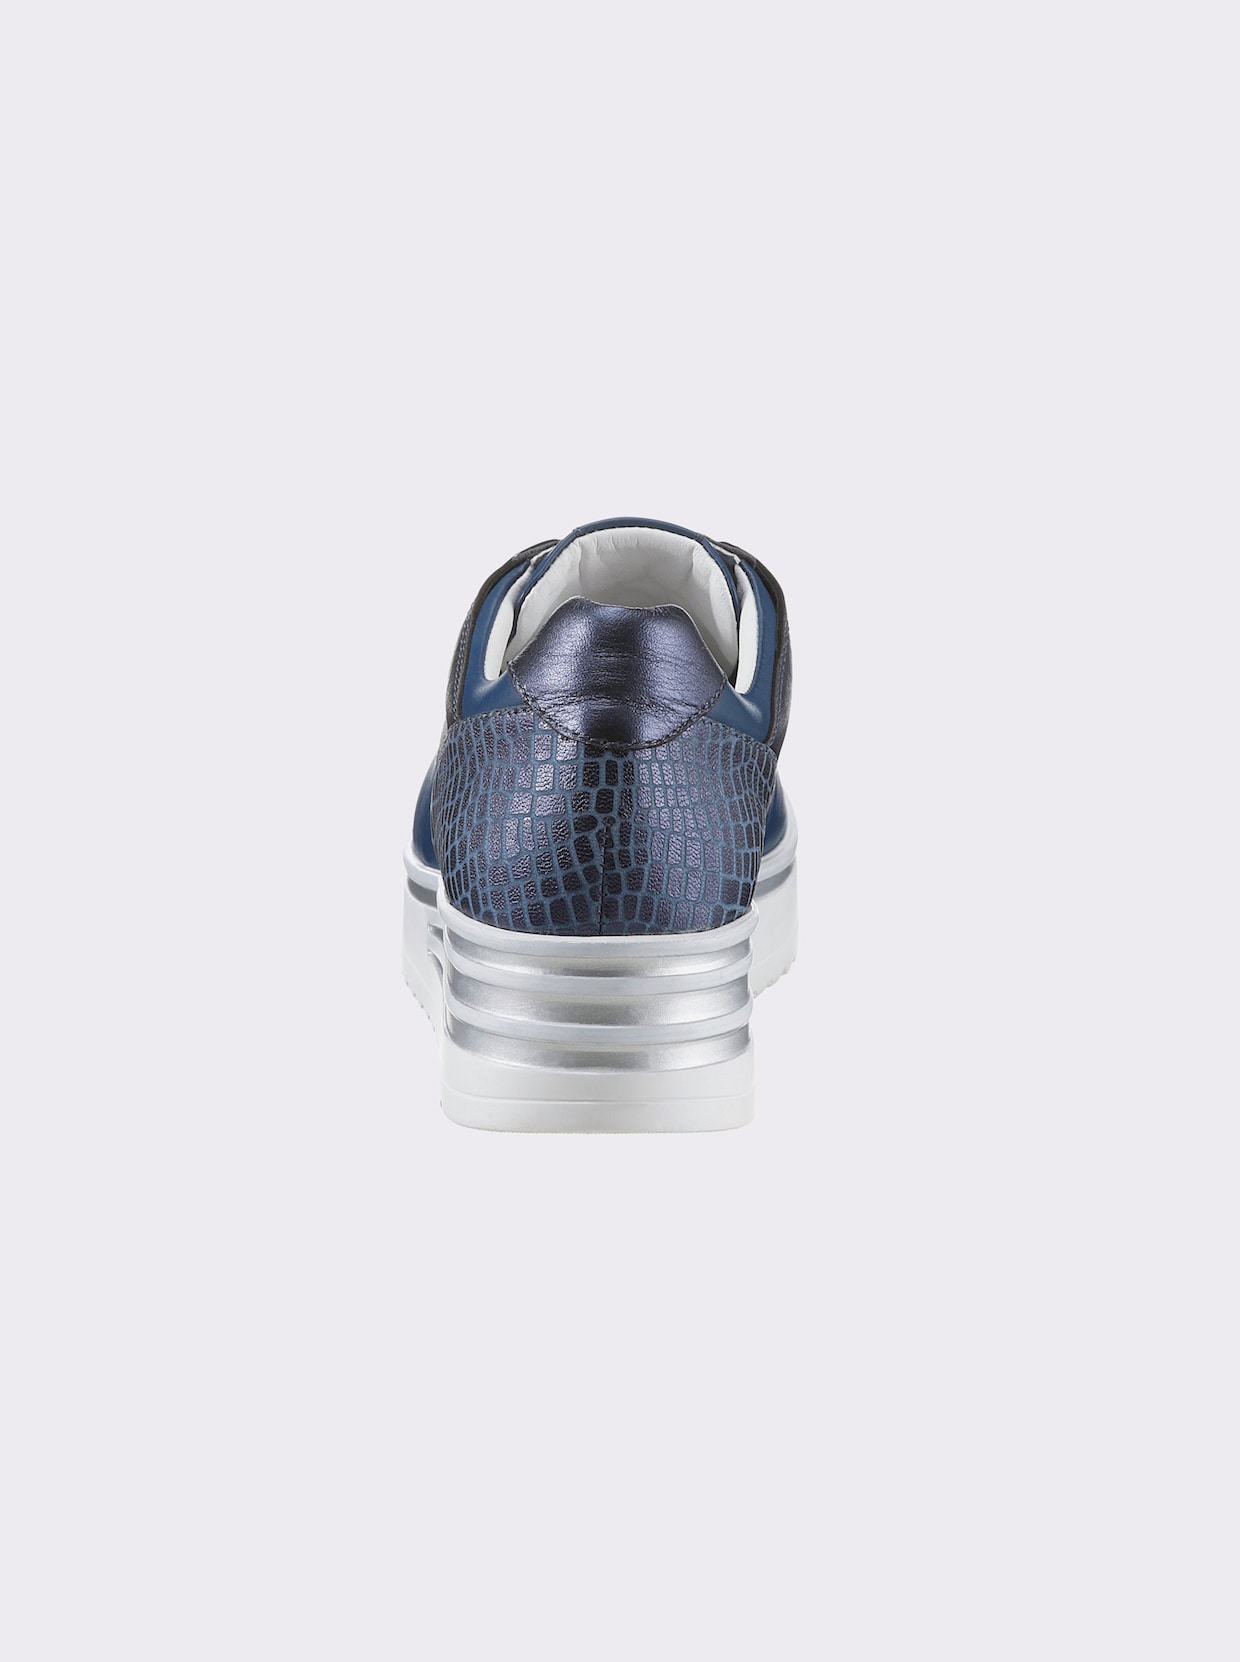 airsoft modern+ Sneaker - jeansblau